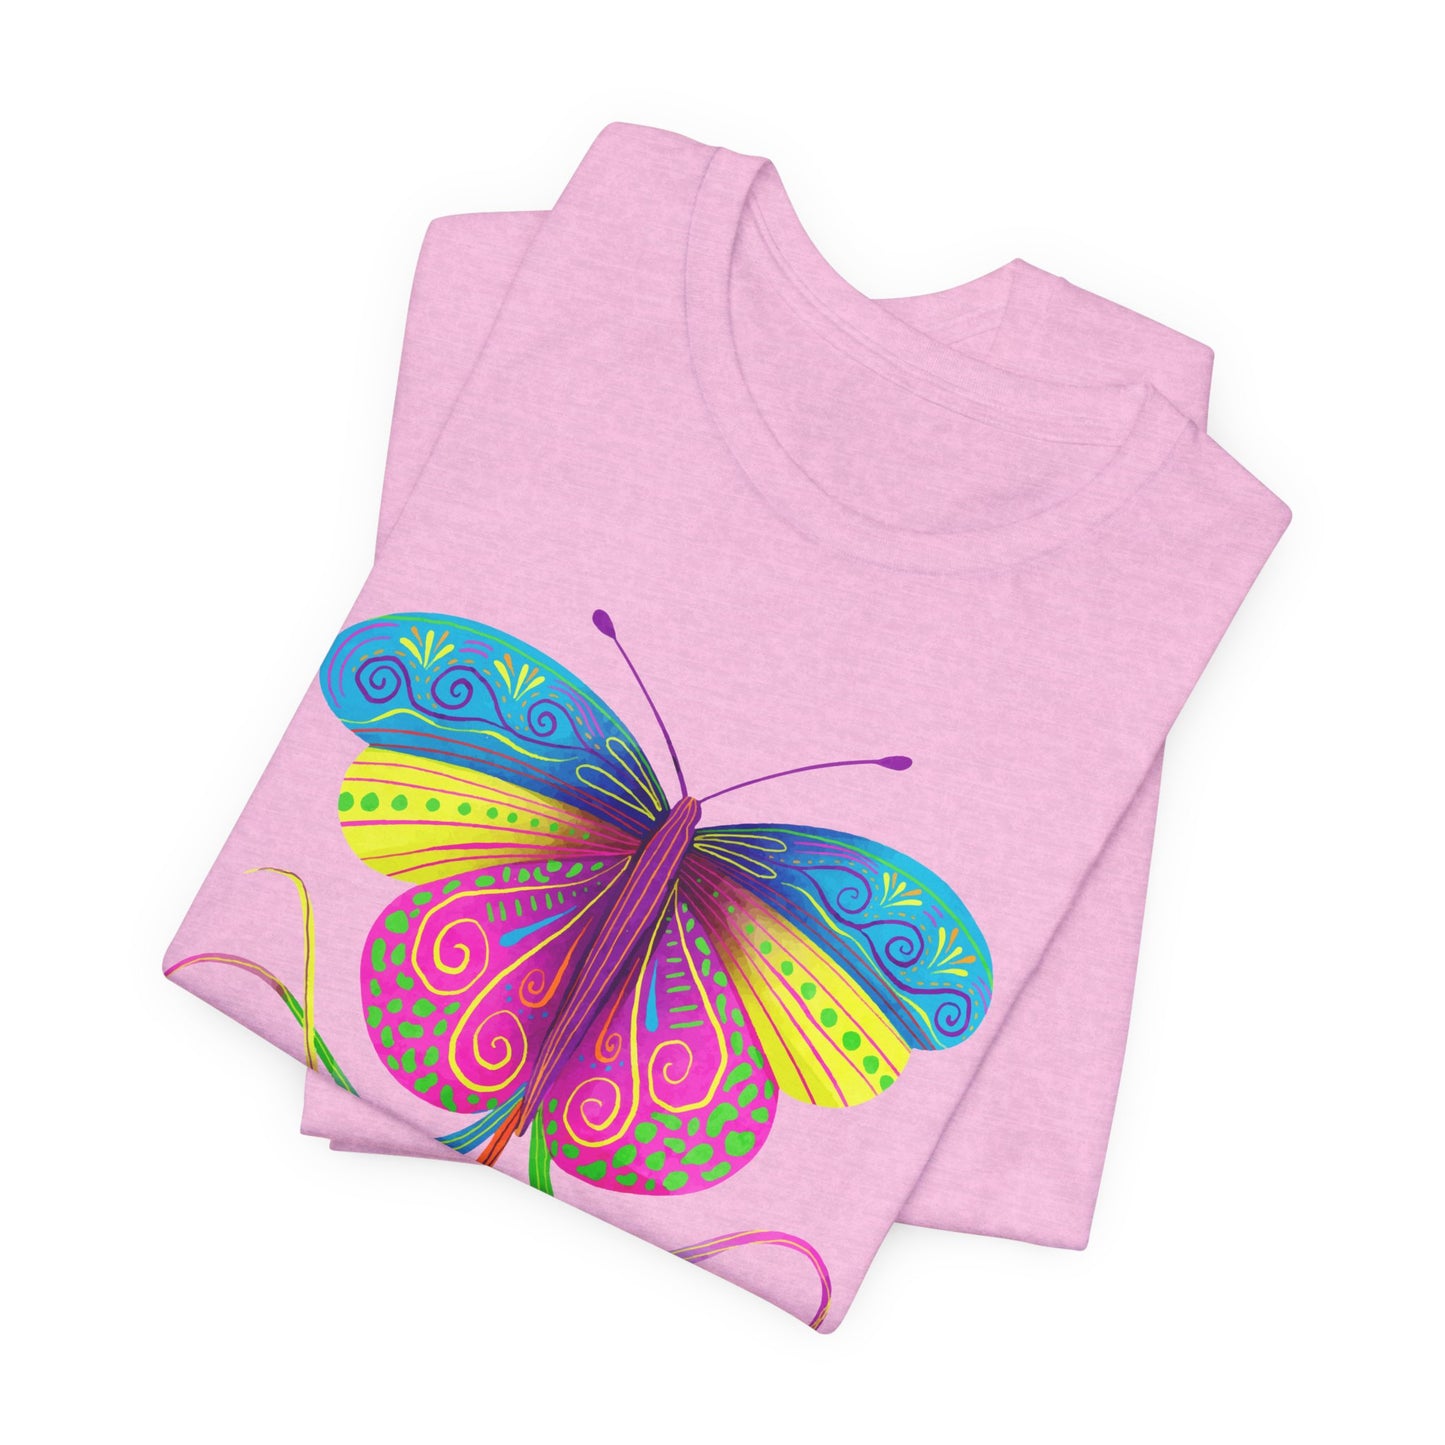 Butterfly T-Shirt For Mexican Folk Art T Shirt For Cinco de Mayo Watercolor TShirt